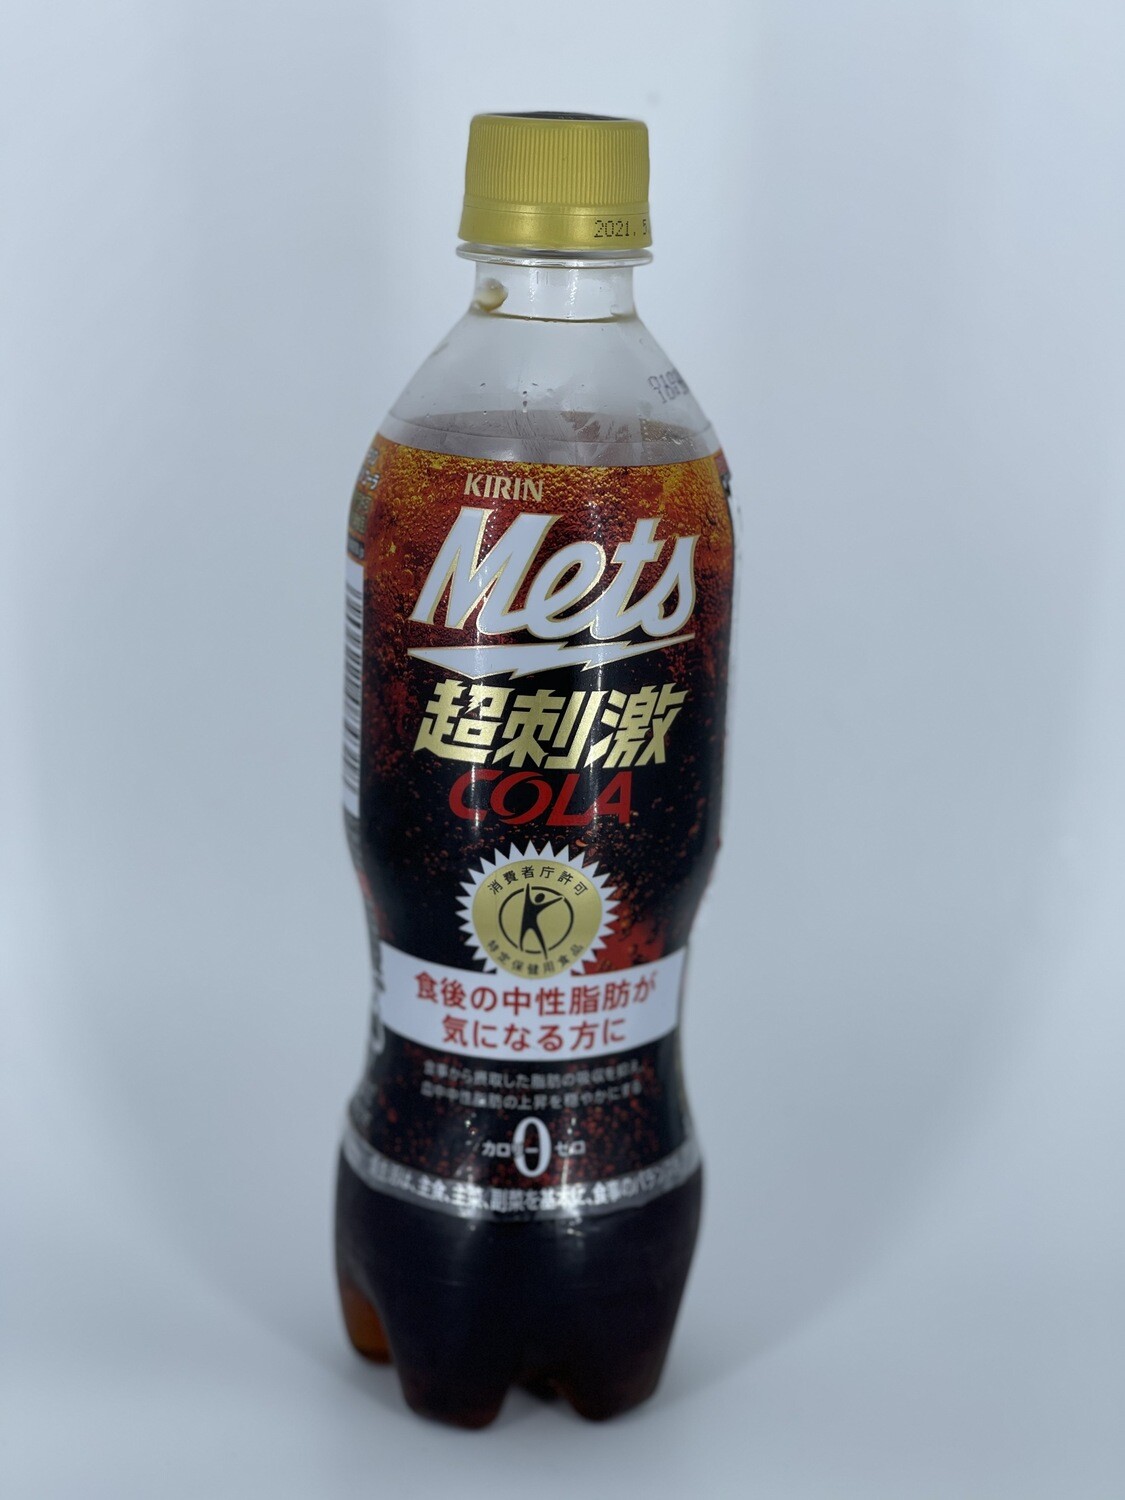 Mets Cola